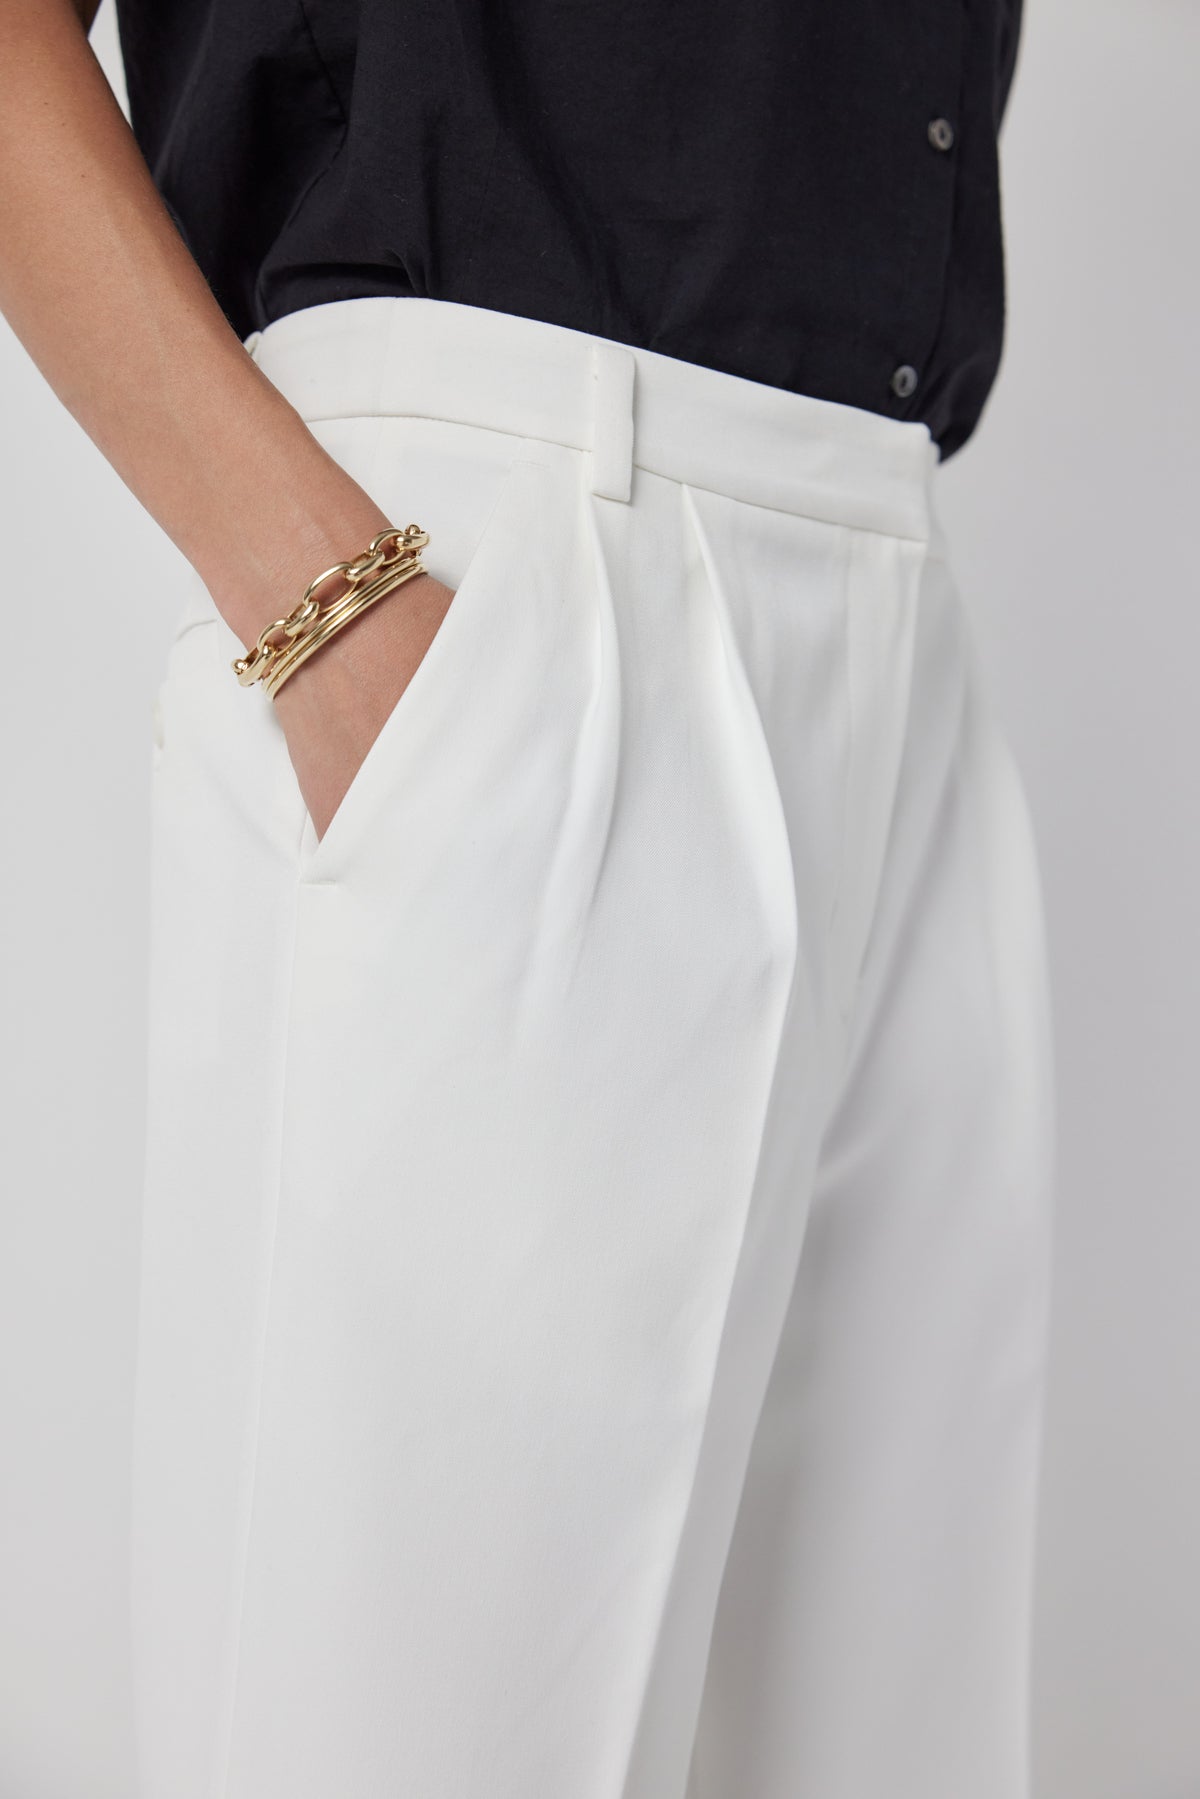 A woman wearing Velvet by Jenny Graham's BUNDY PANT trousers and a gold bracelet.-36168659173569